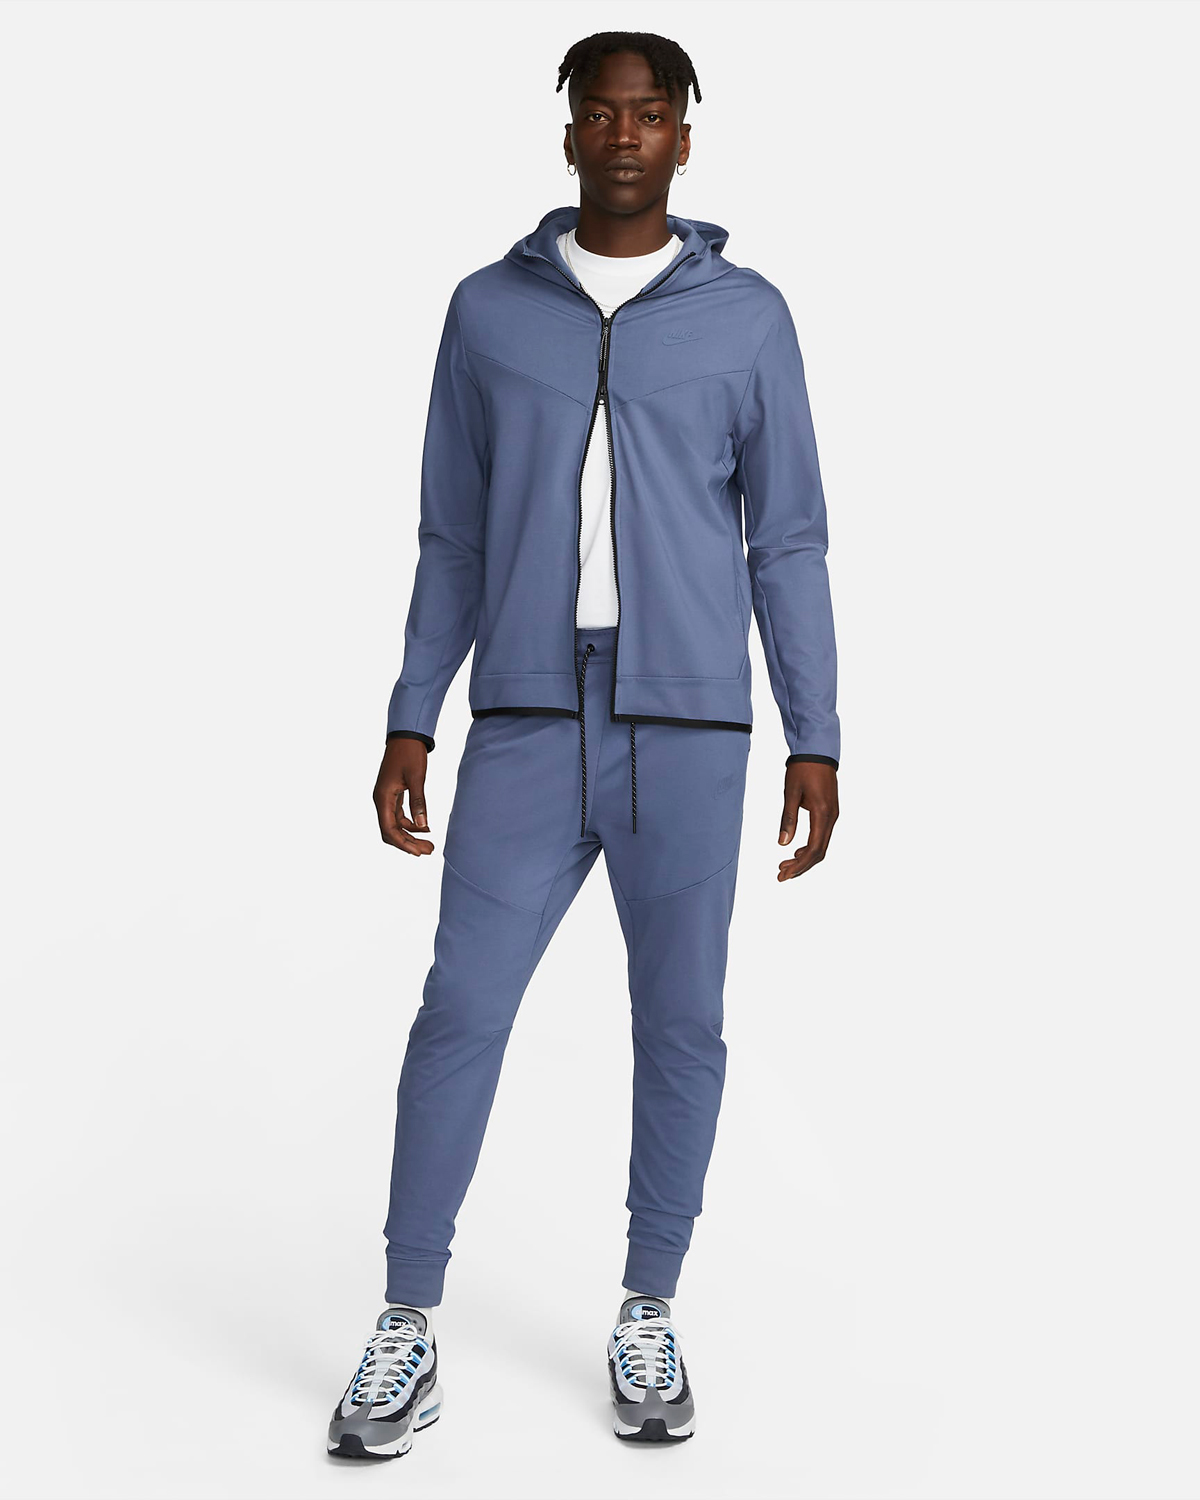 Nike-Tech-Fleece-Lightweight-Hoodie-and-Pants-Diffused-Blue